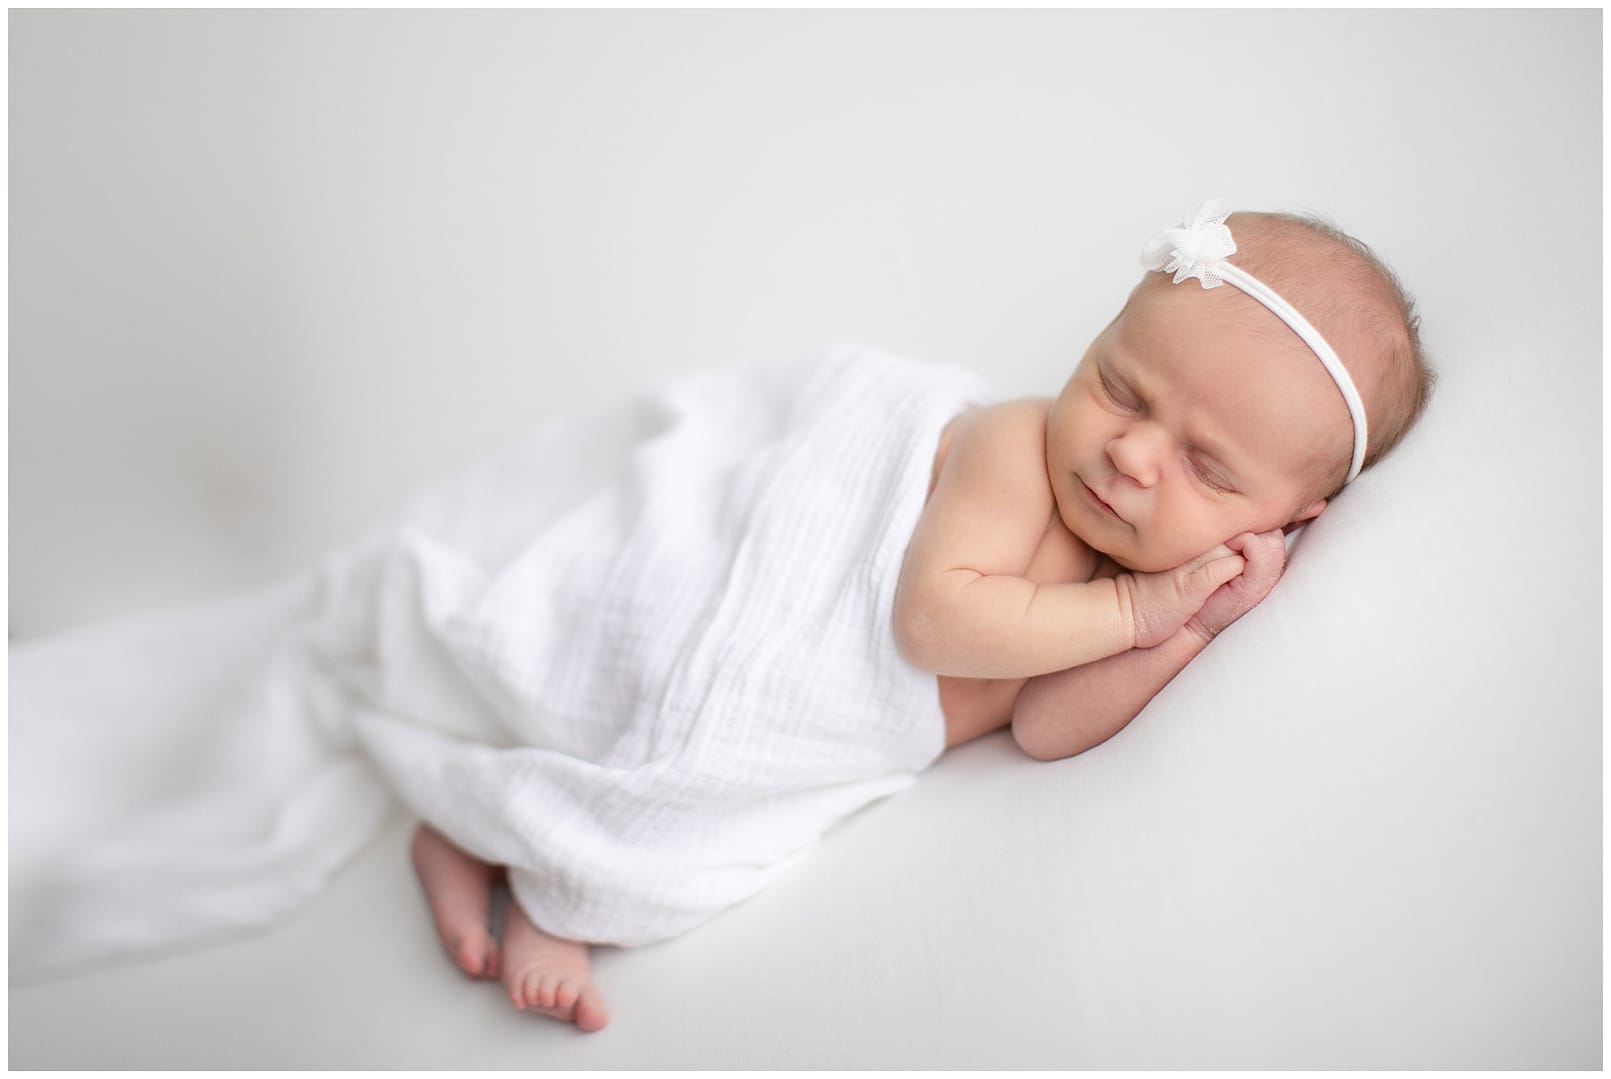 Boise newborn photographer. Baby led posing in studio. Photo by Tiffany Hix Photography.